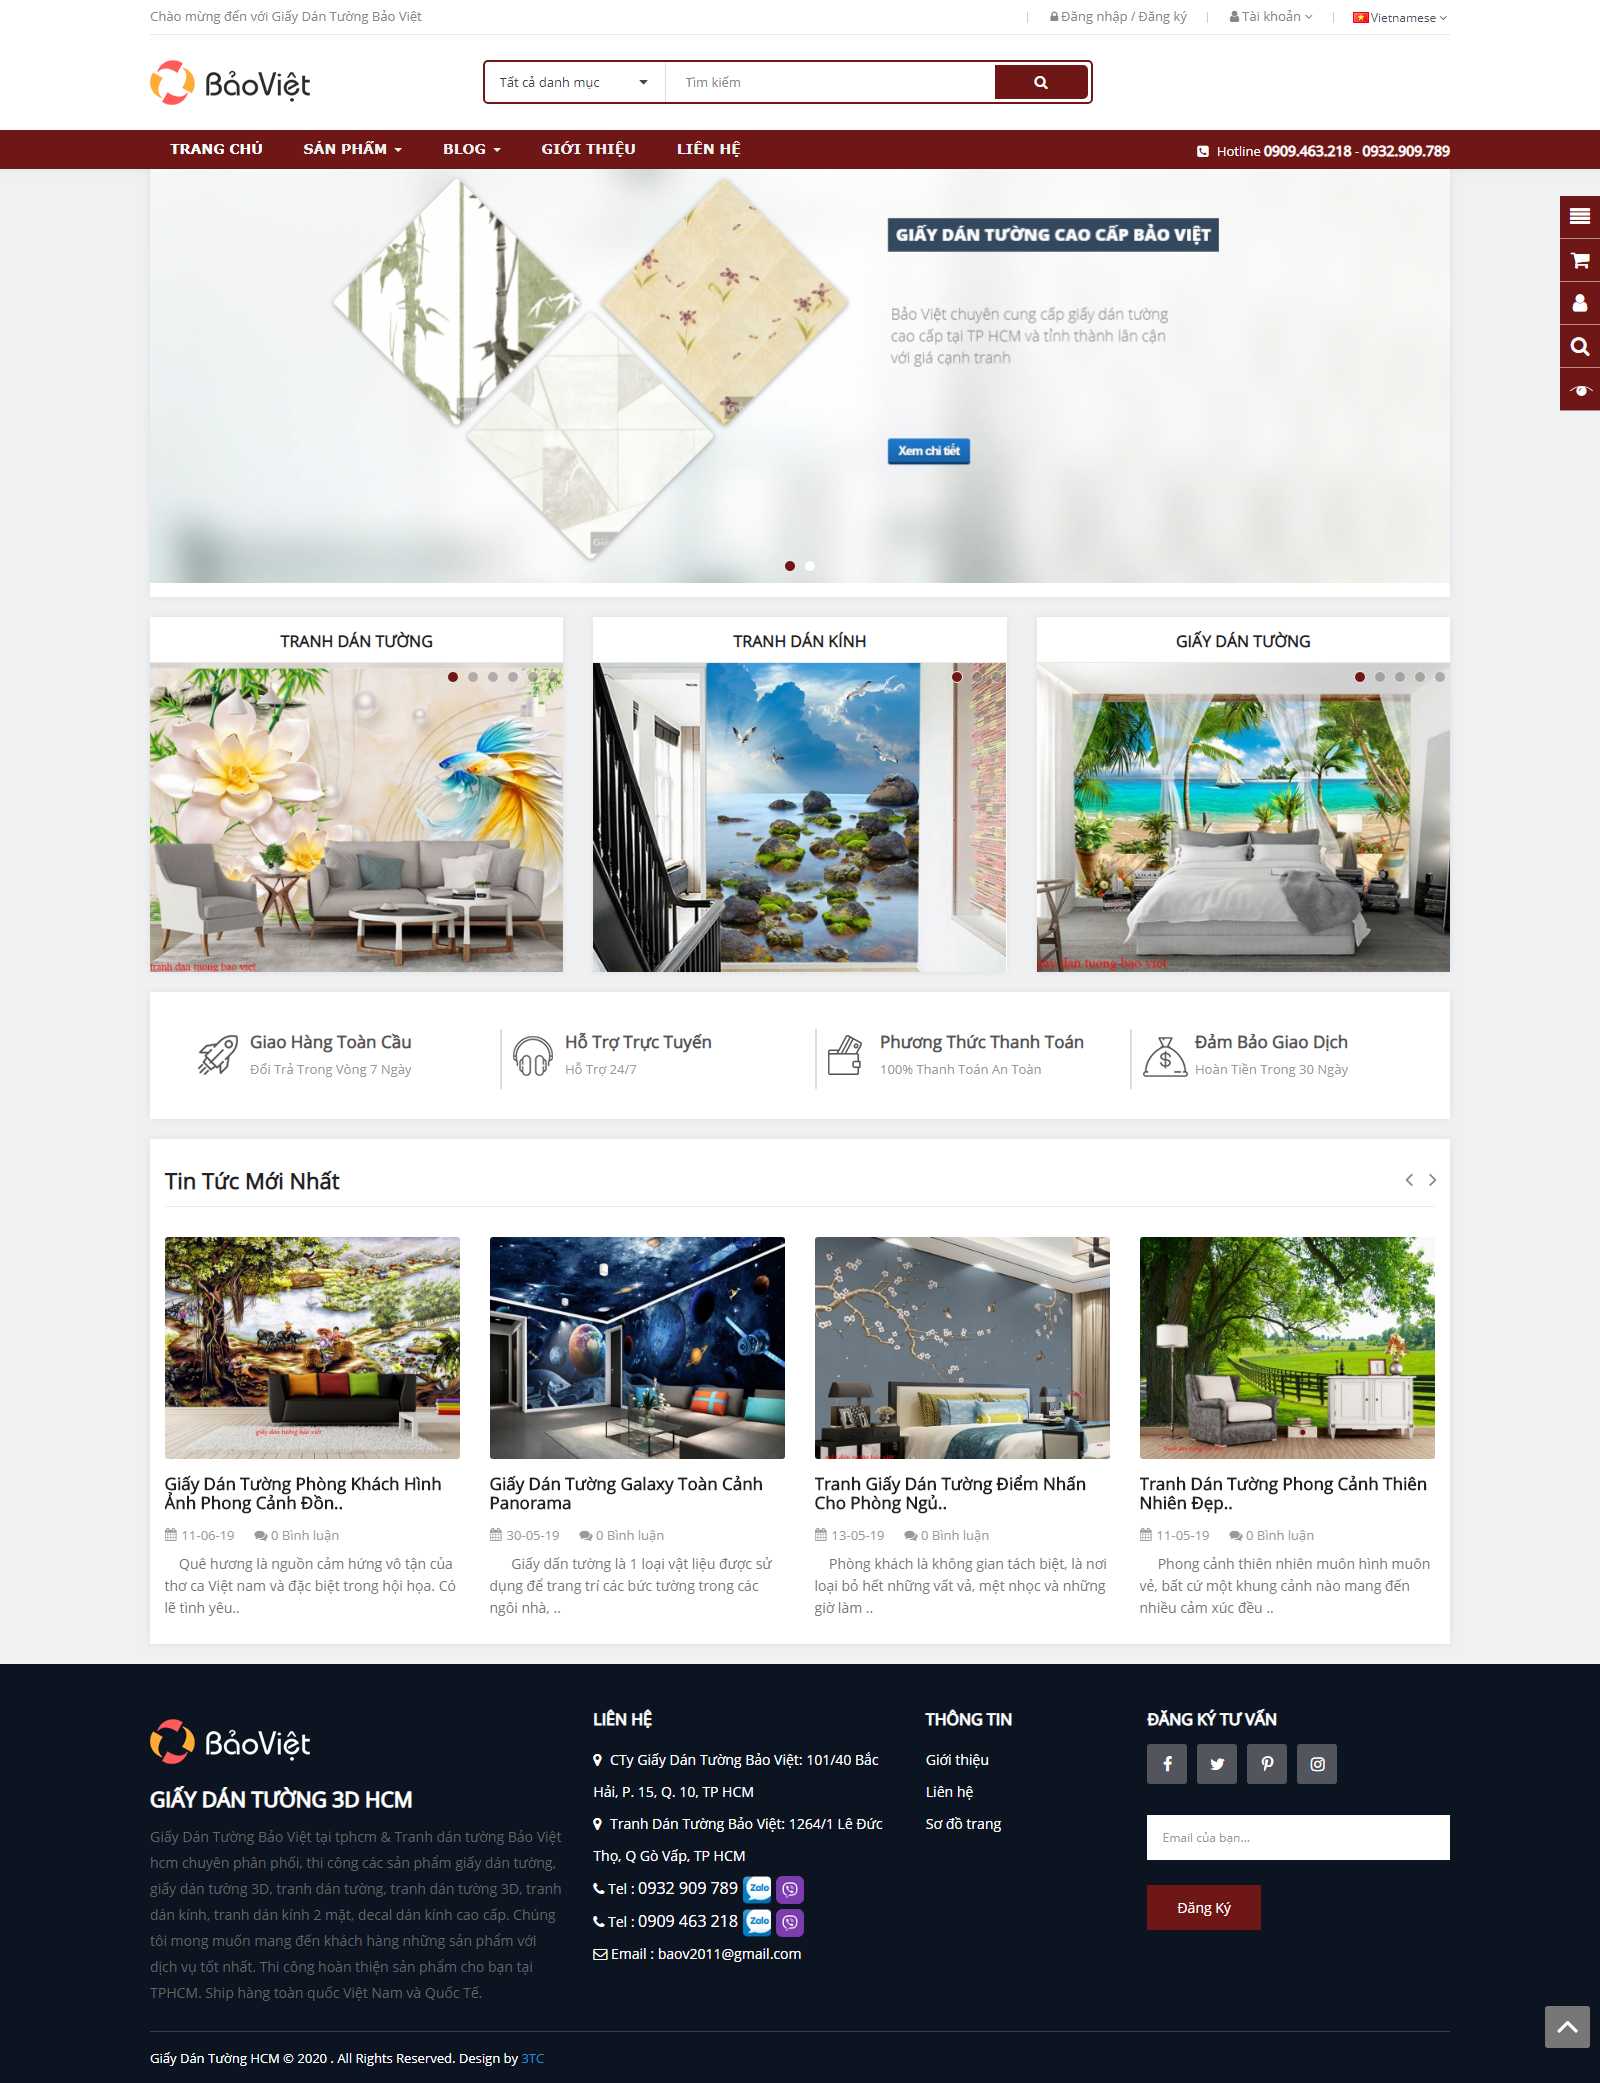 Thiết kế Website shop - giaydantuonghcm.net